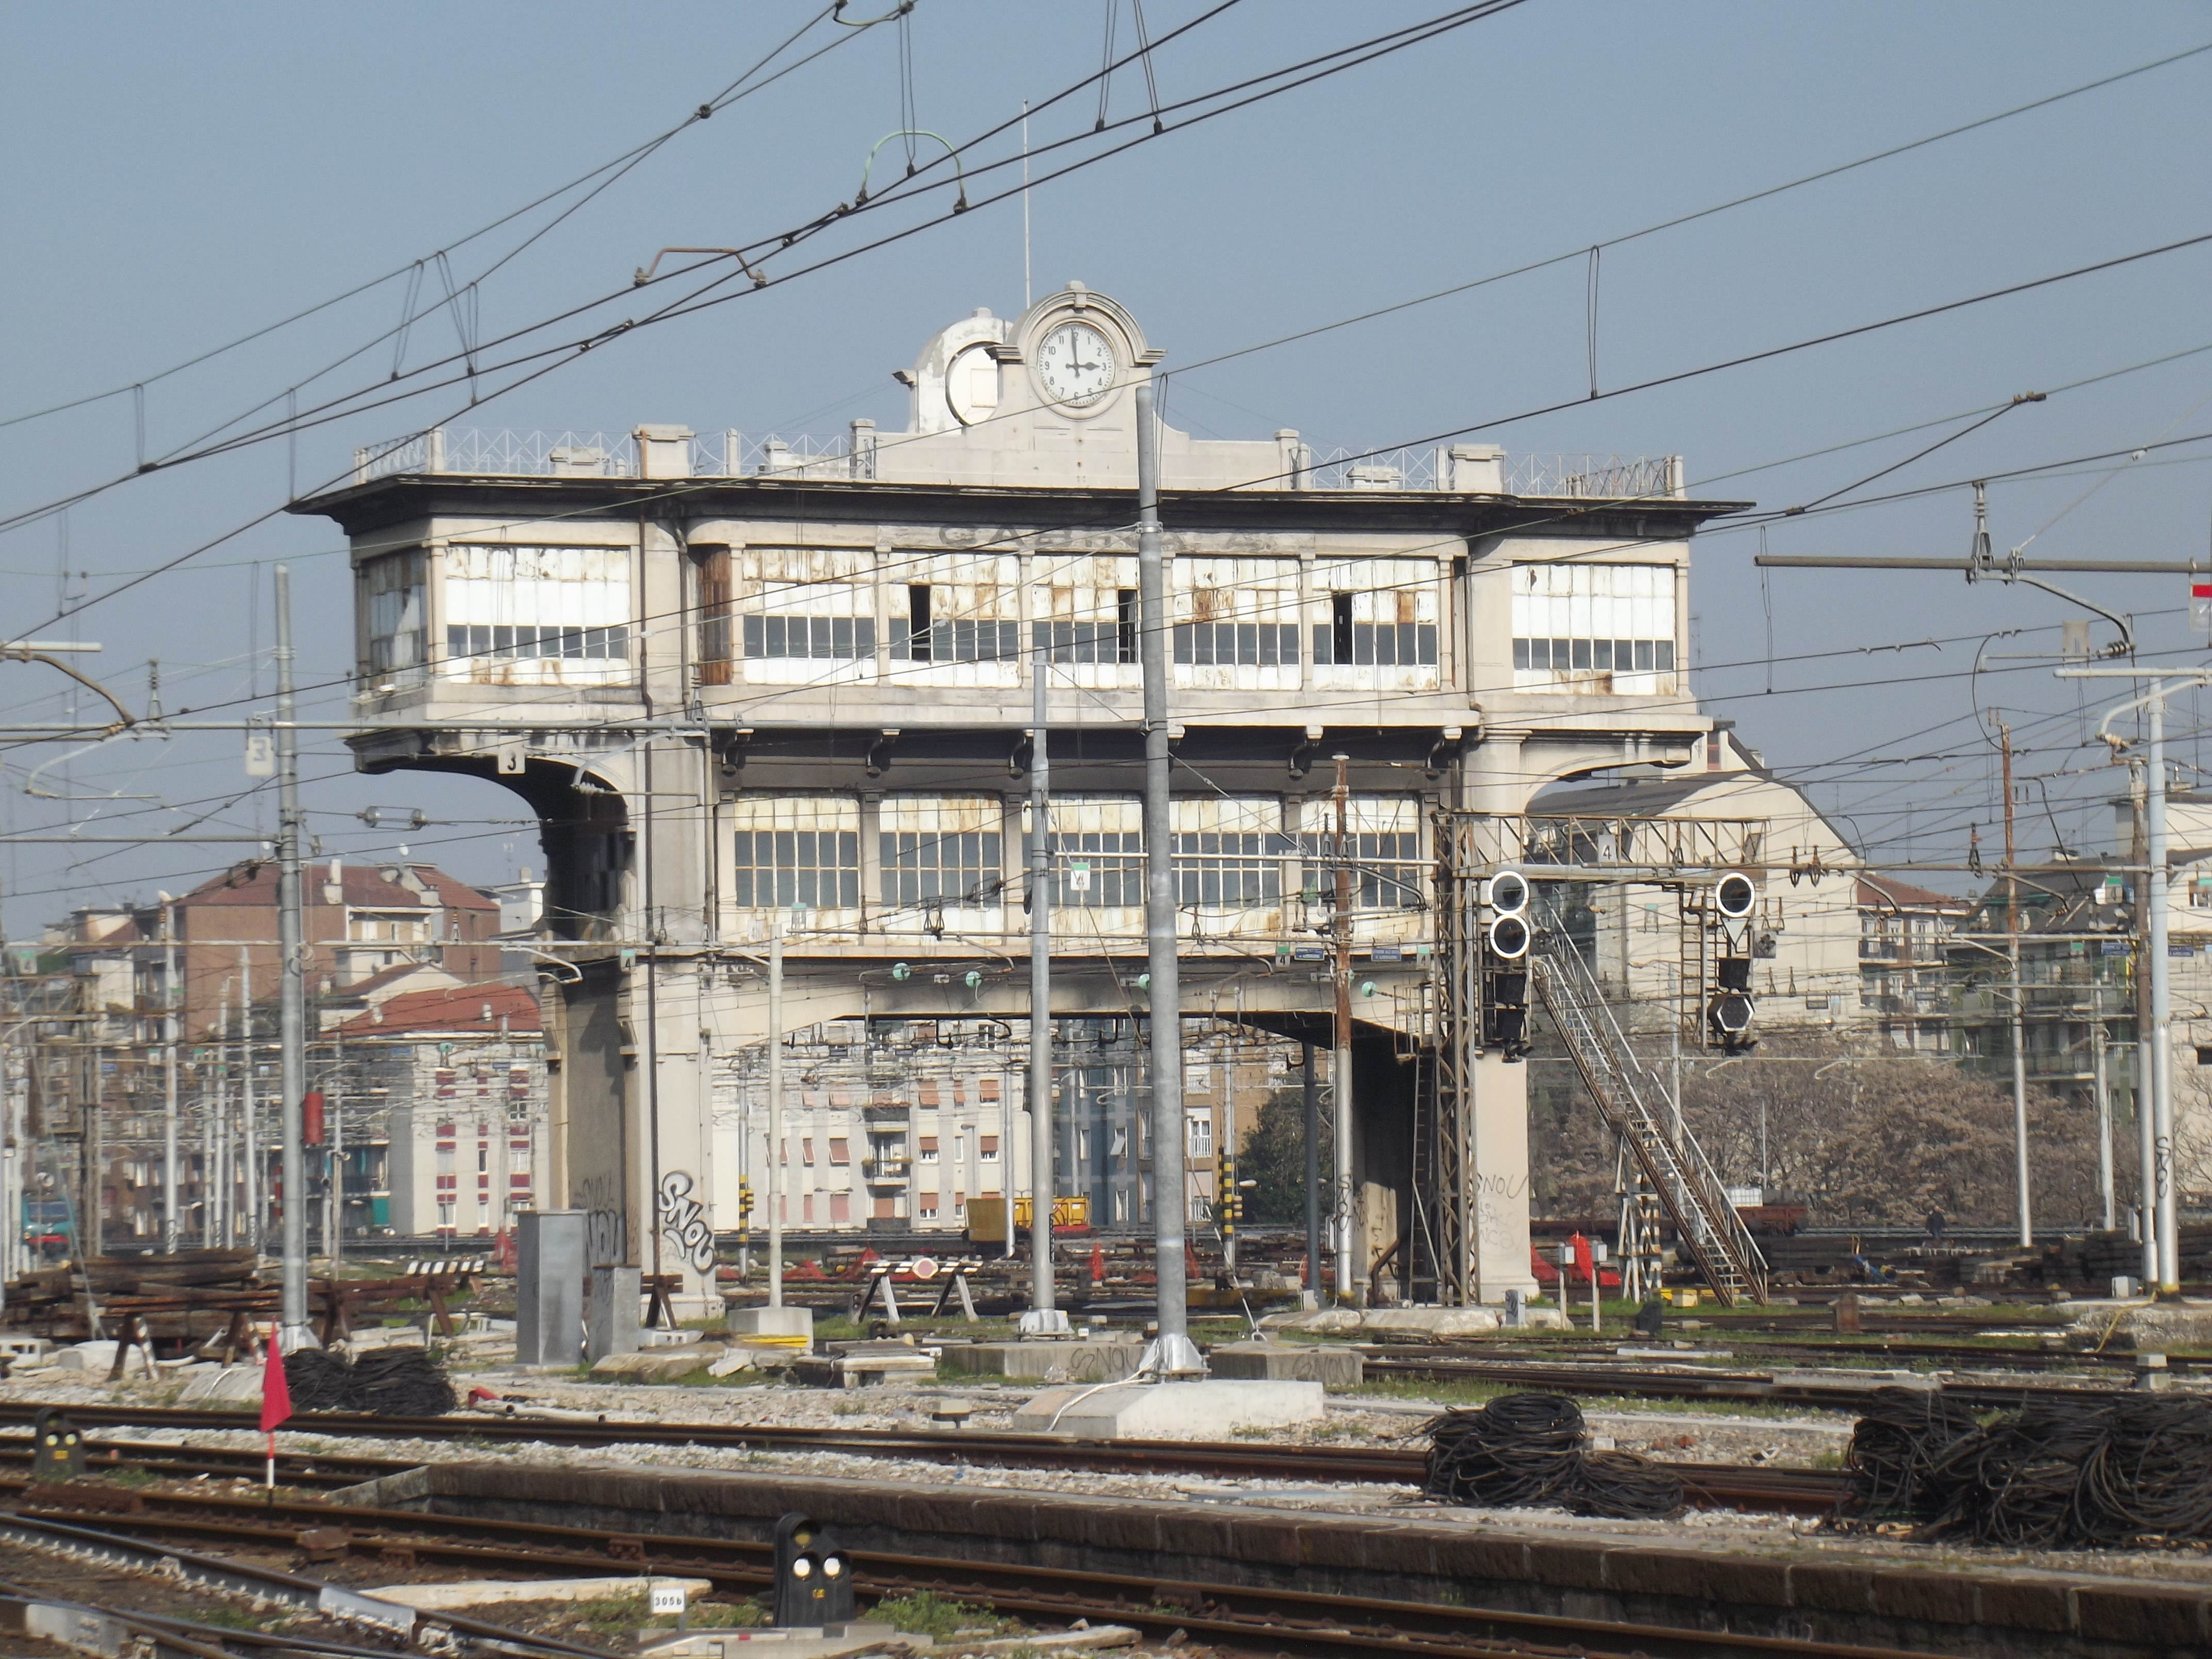 File:Old signalbox in Milano Central.jpg - Wikimedia Commons